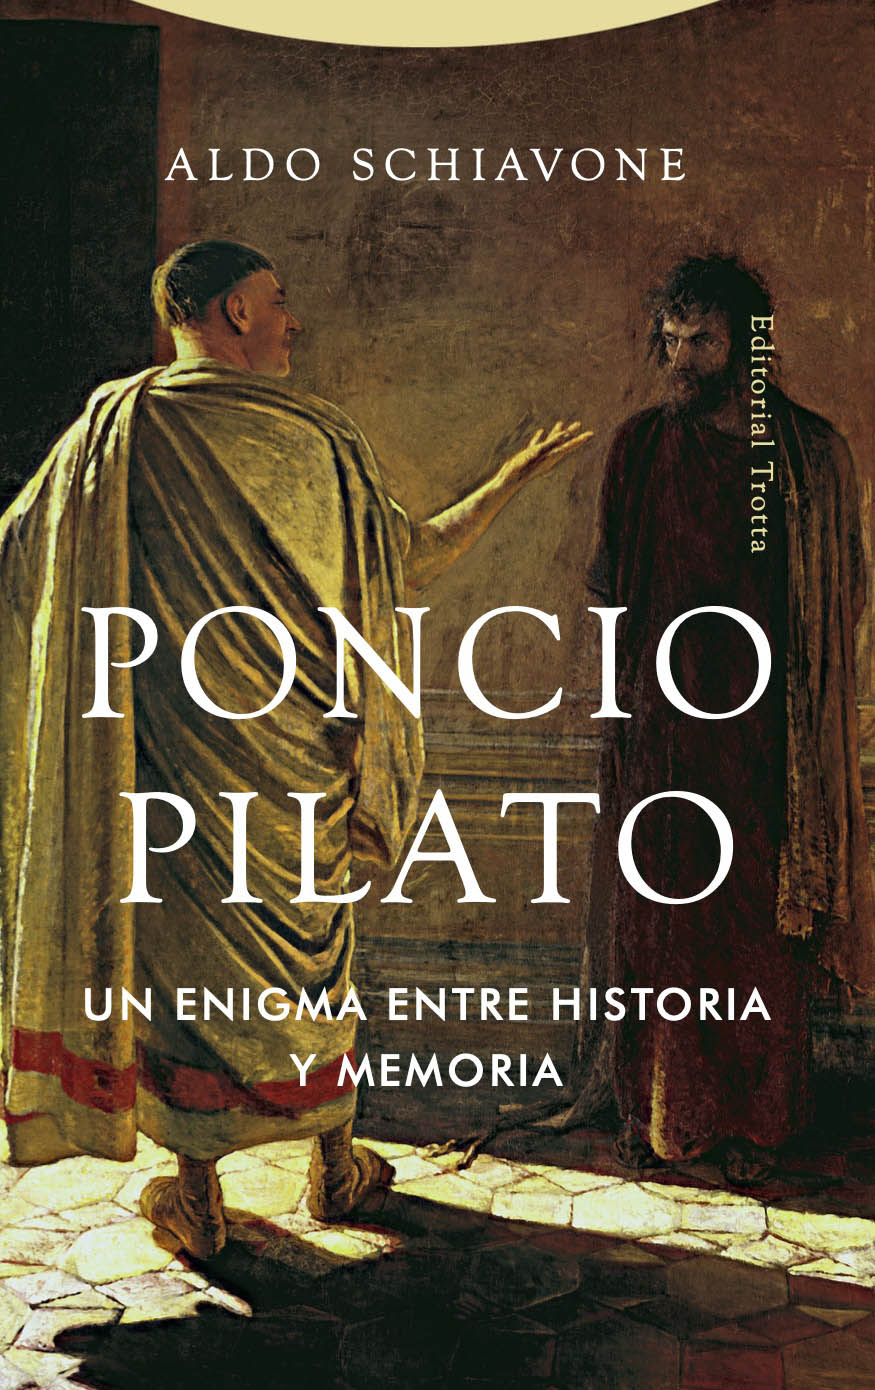 Poncio Pilato Un enigma entre historia y memoria Aldo Schiavone - photo 1